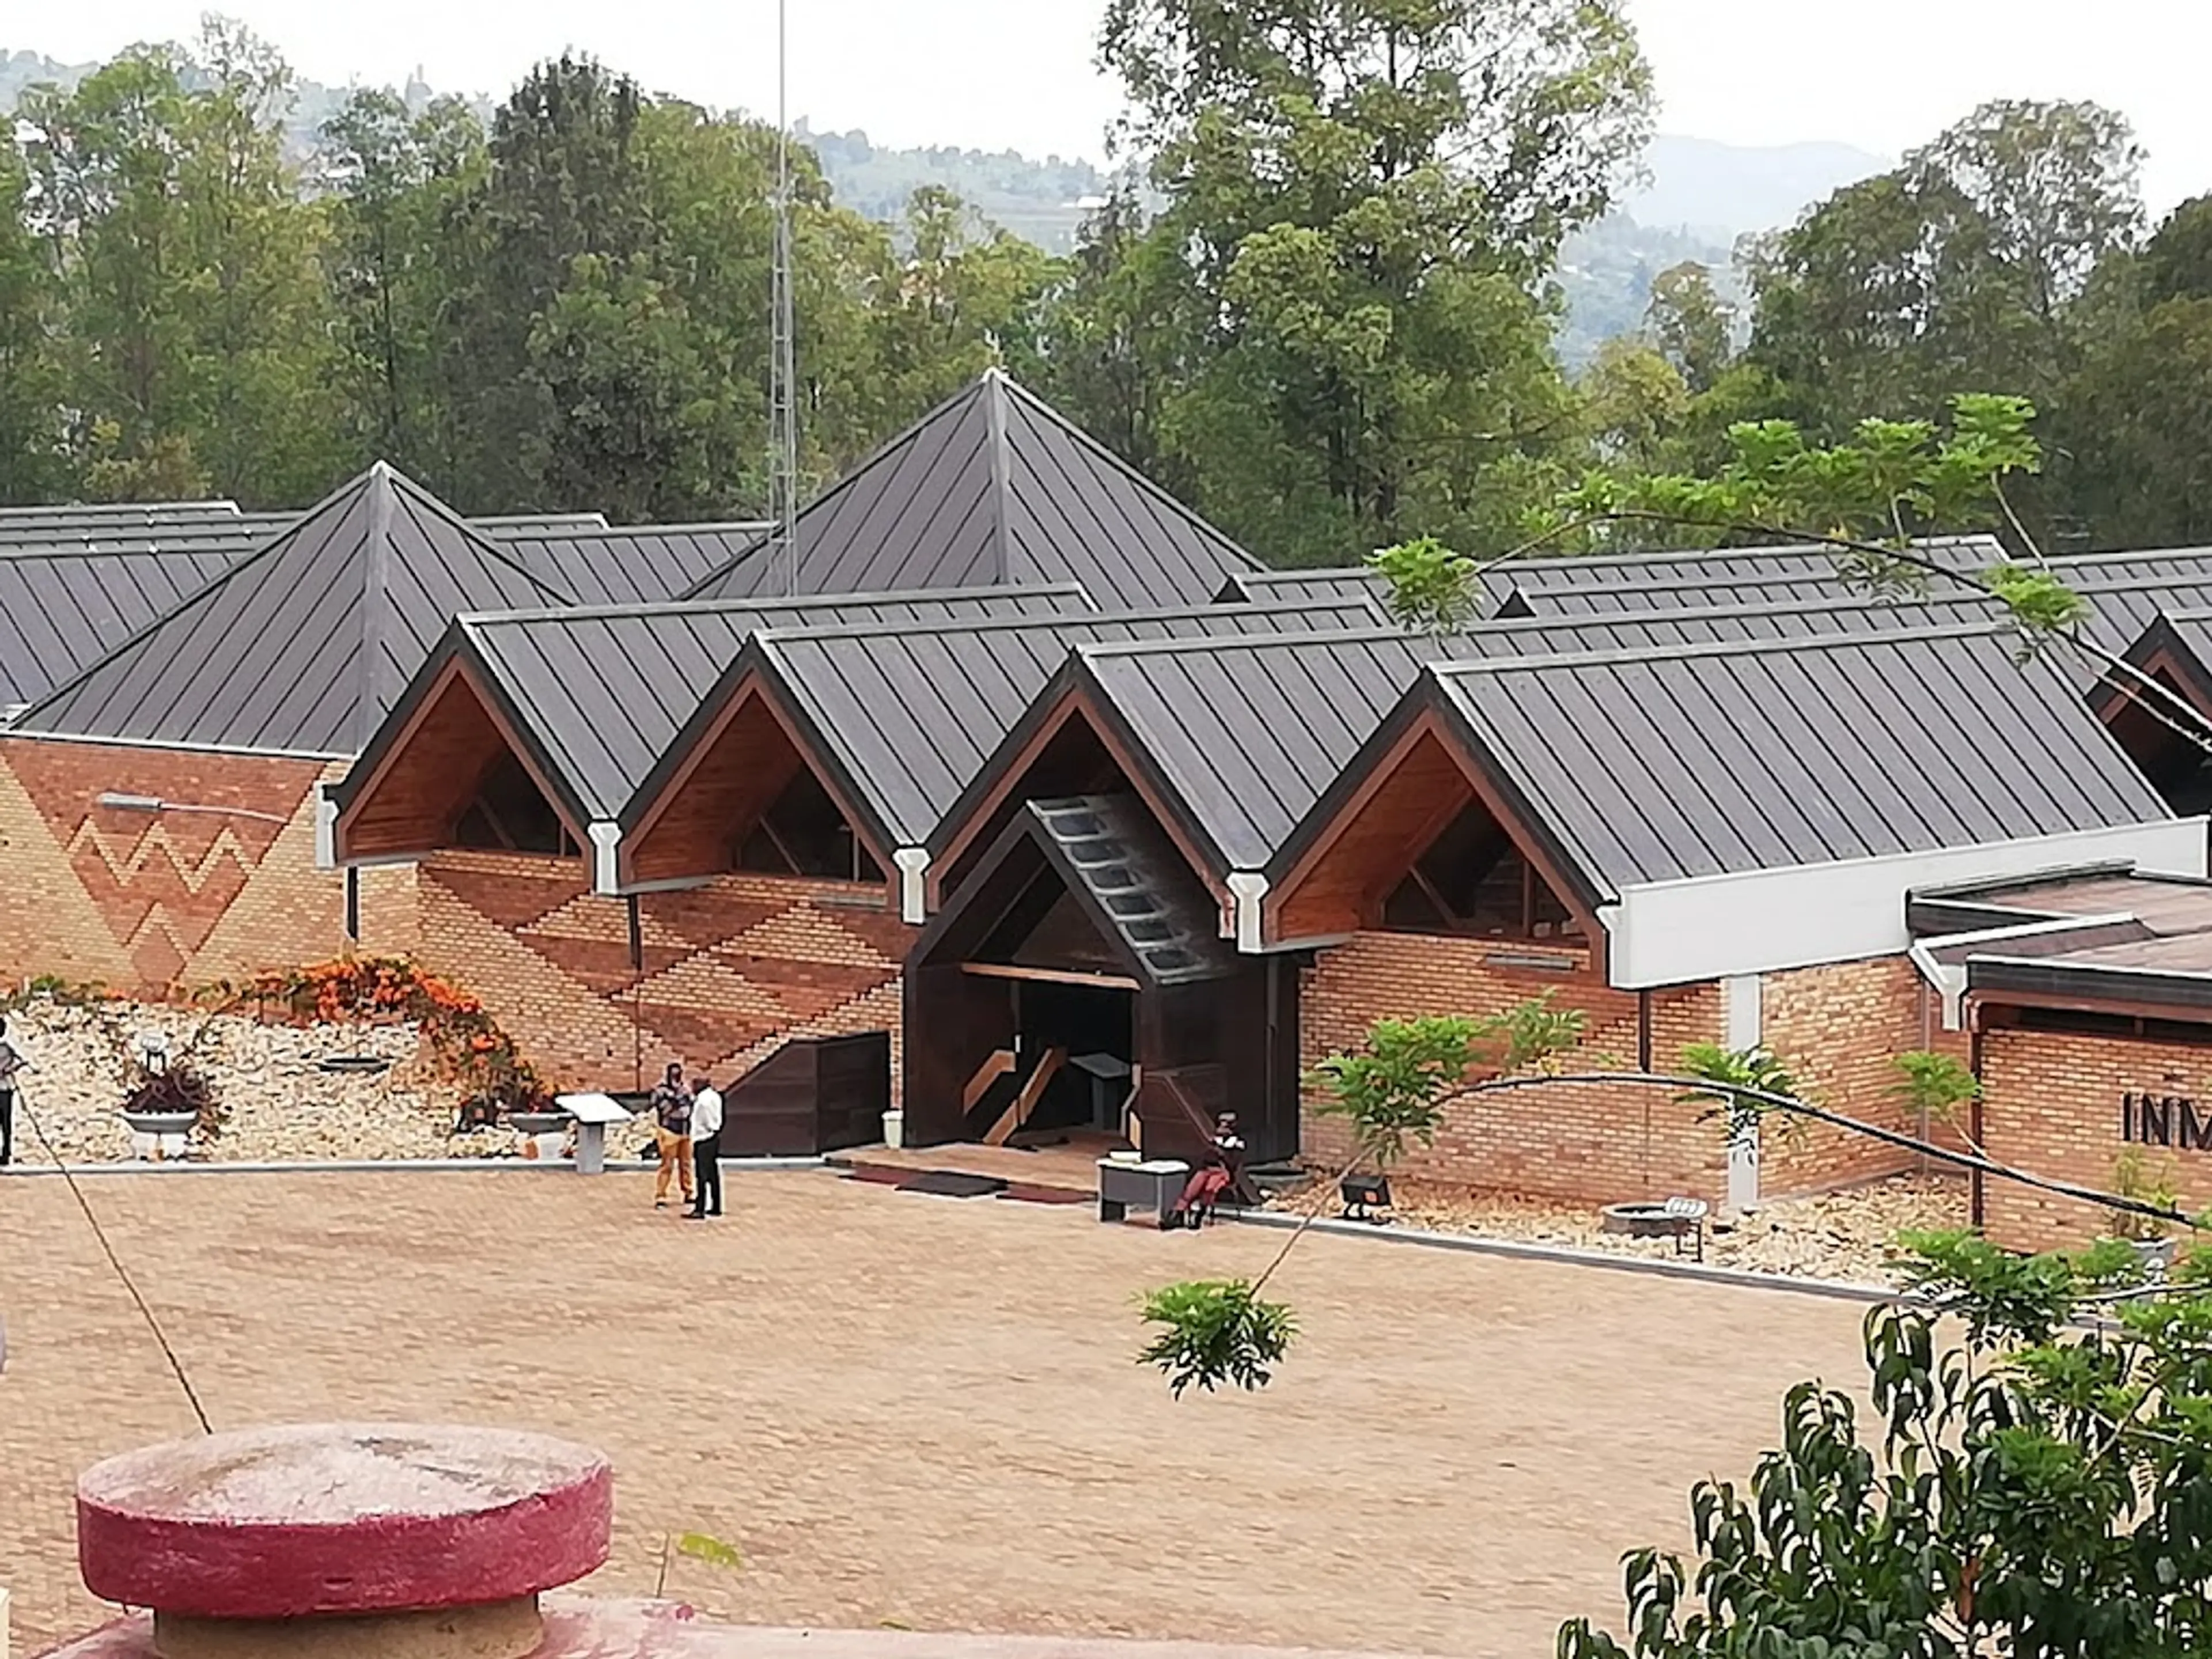 National Museum of Rwanda